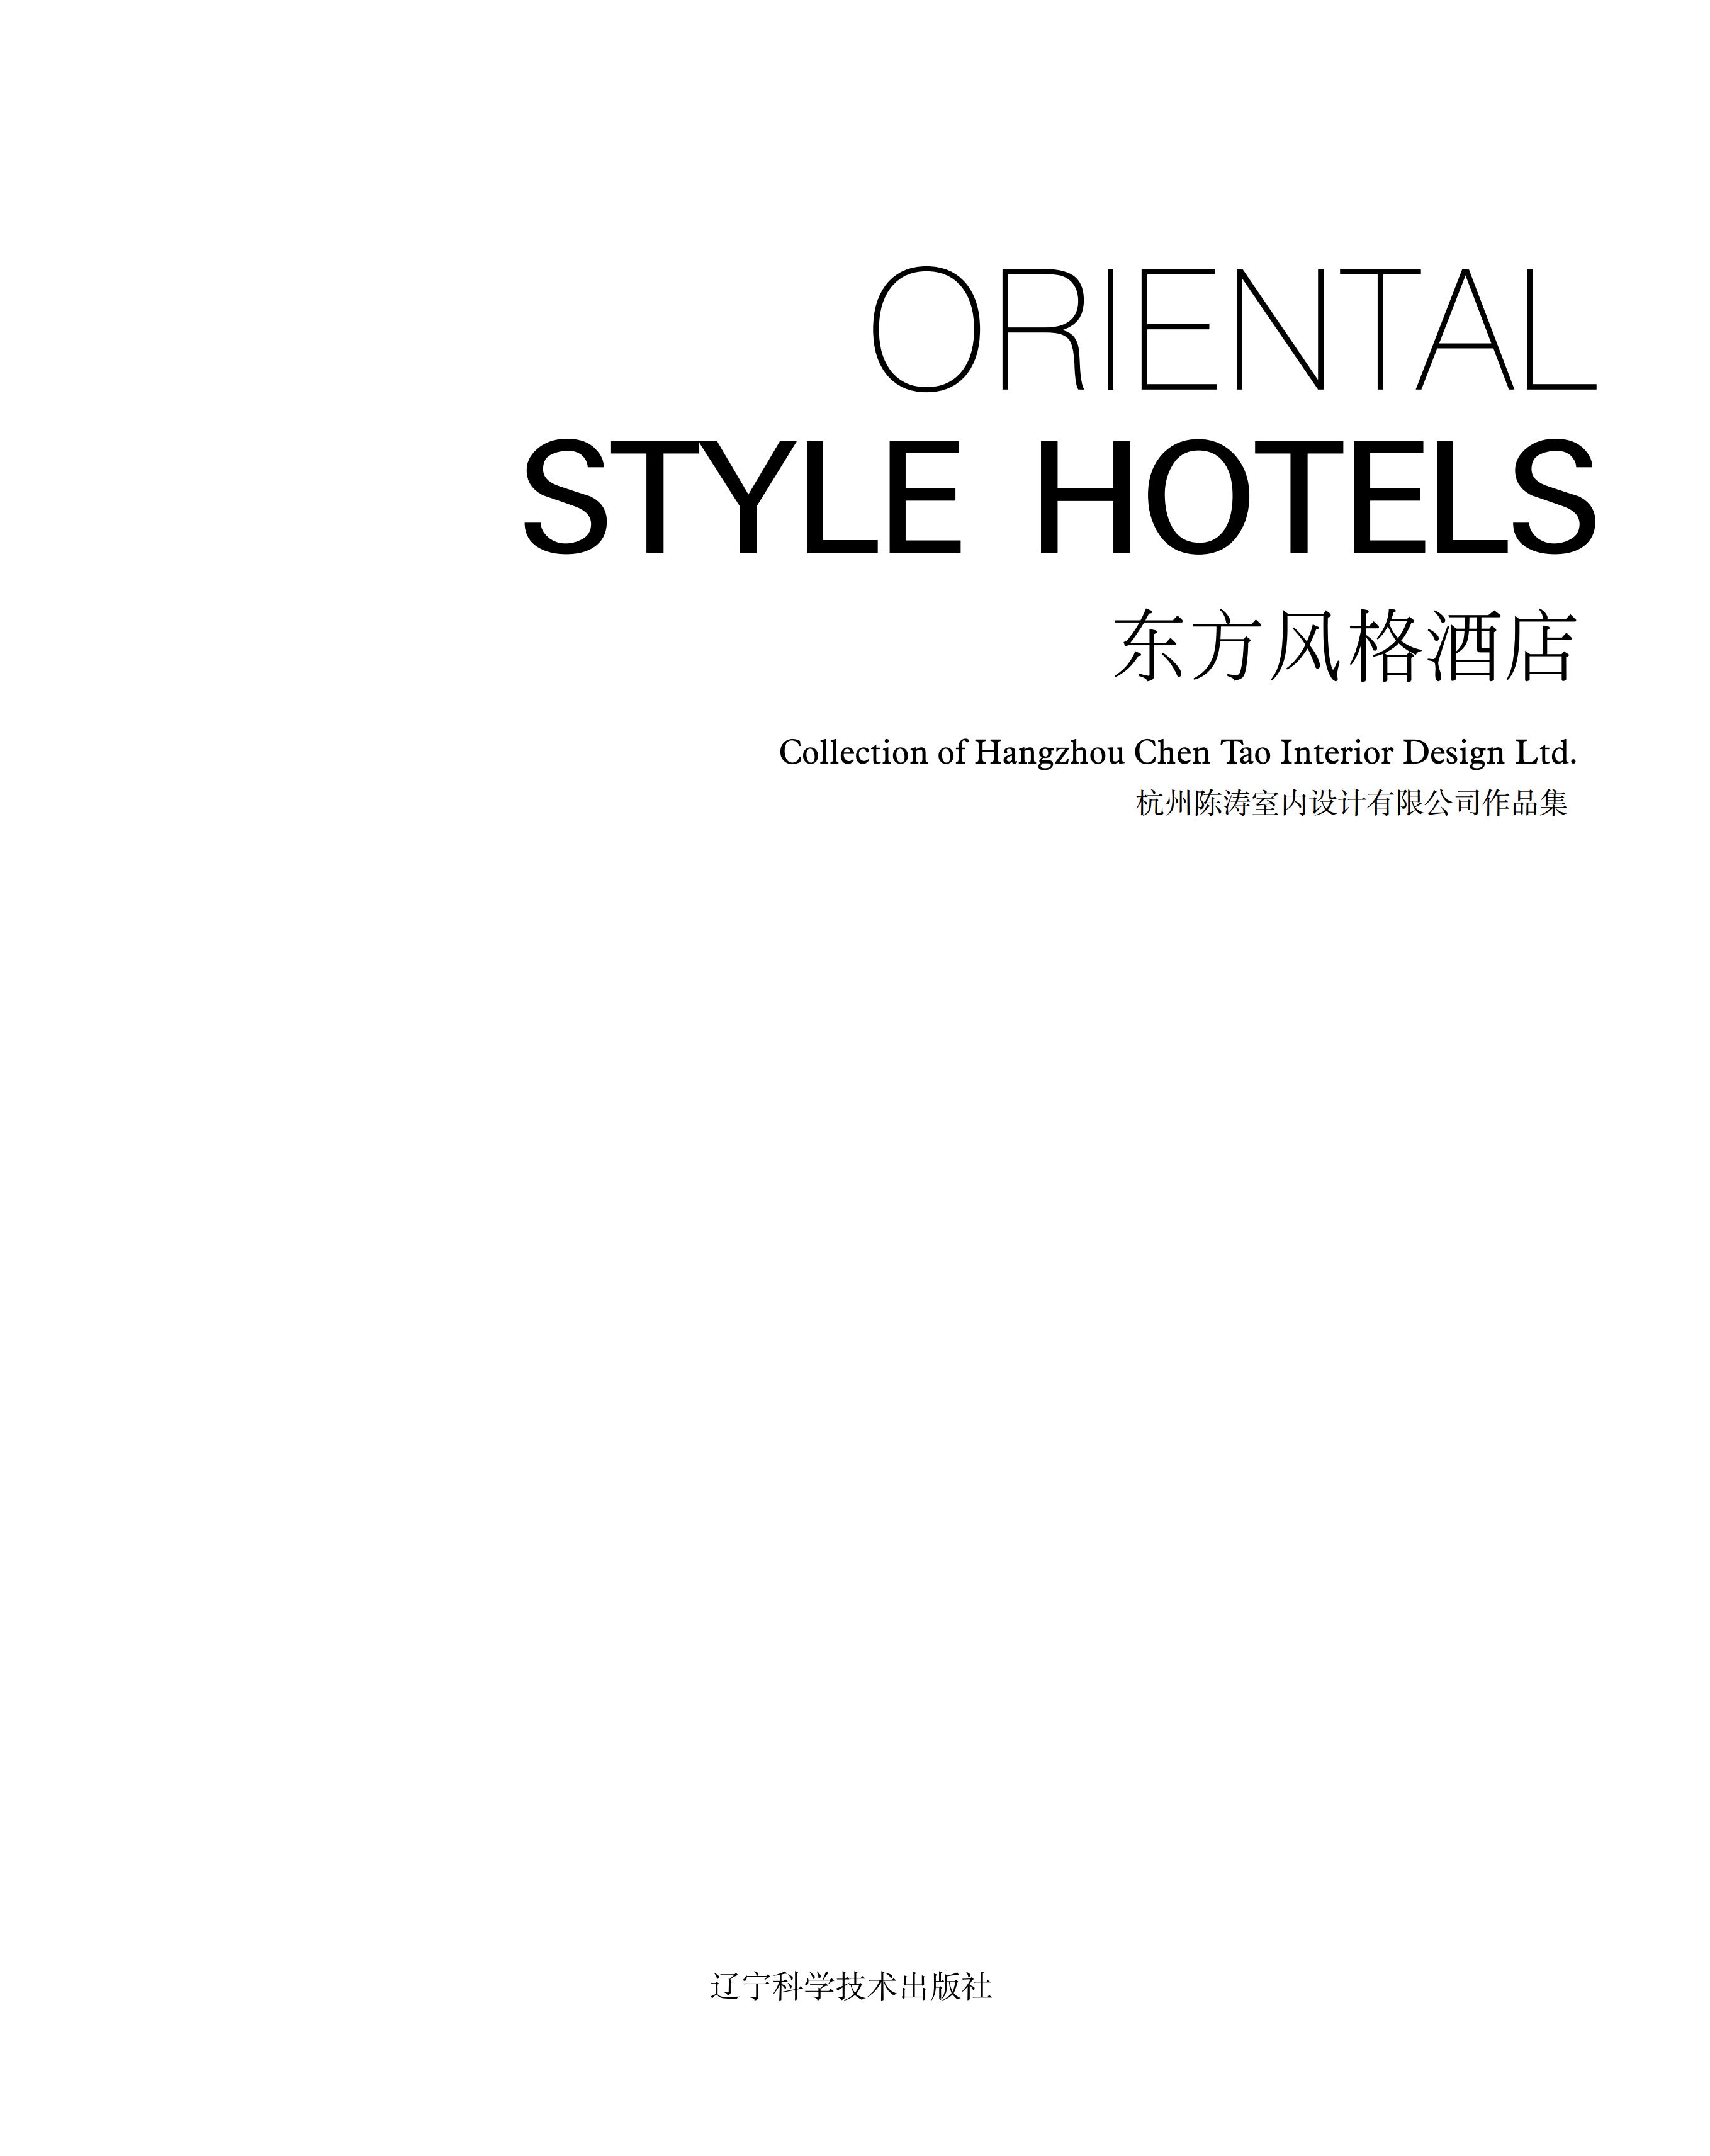 Oriental style hotels : Collection of Hangzhou Chen Tao Interior Design Ltd. = 东方风格酒店 杭州陈涛室内设计有限公司作品集 / Arthur Gao. — California, USA : Profession Design Press Co., Ltd., 2012